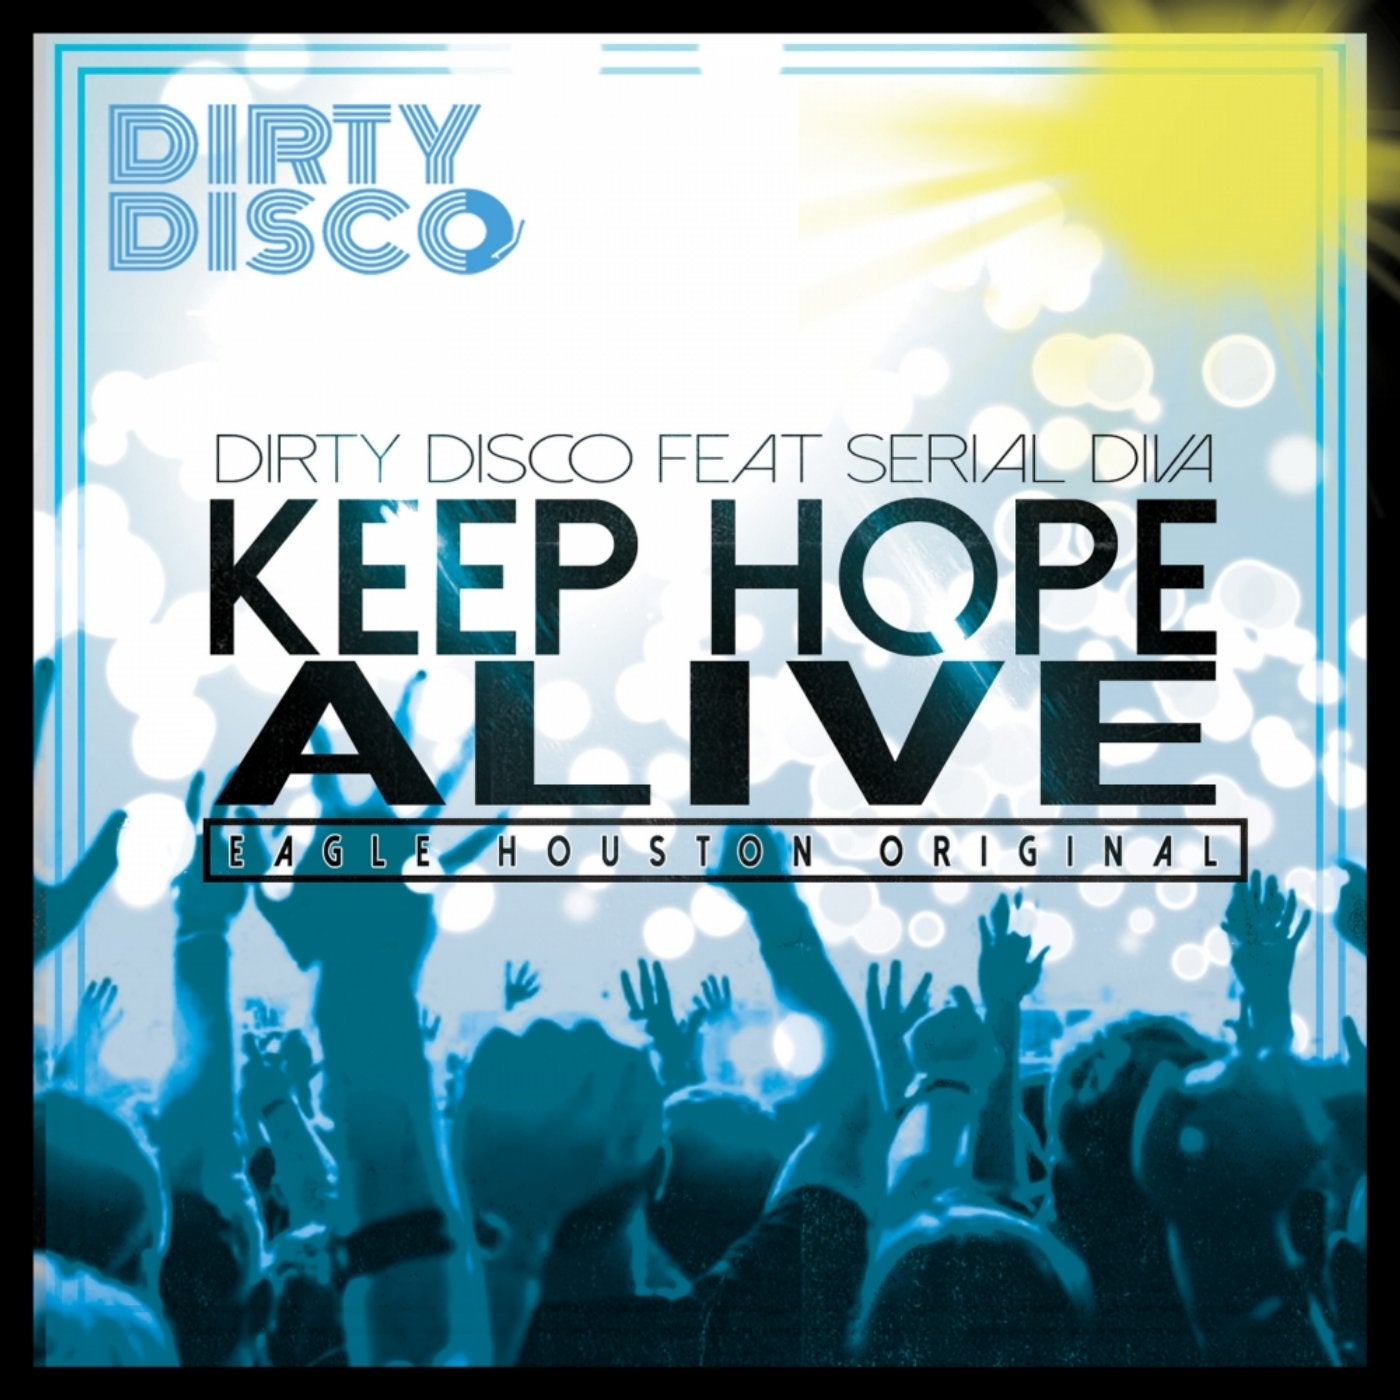 Keep Hope Alive (Eagle Houston Original)